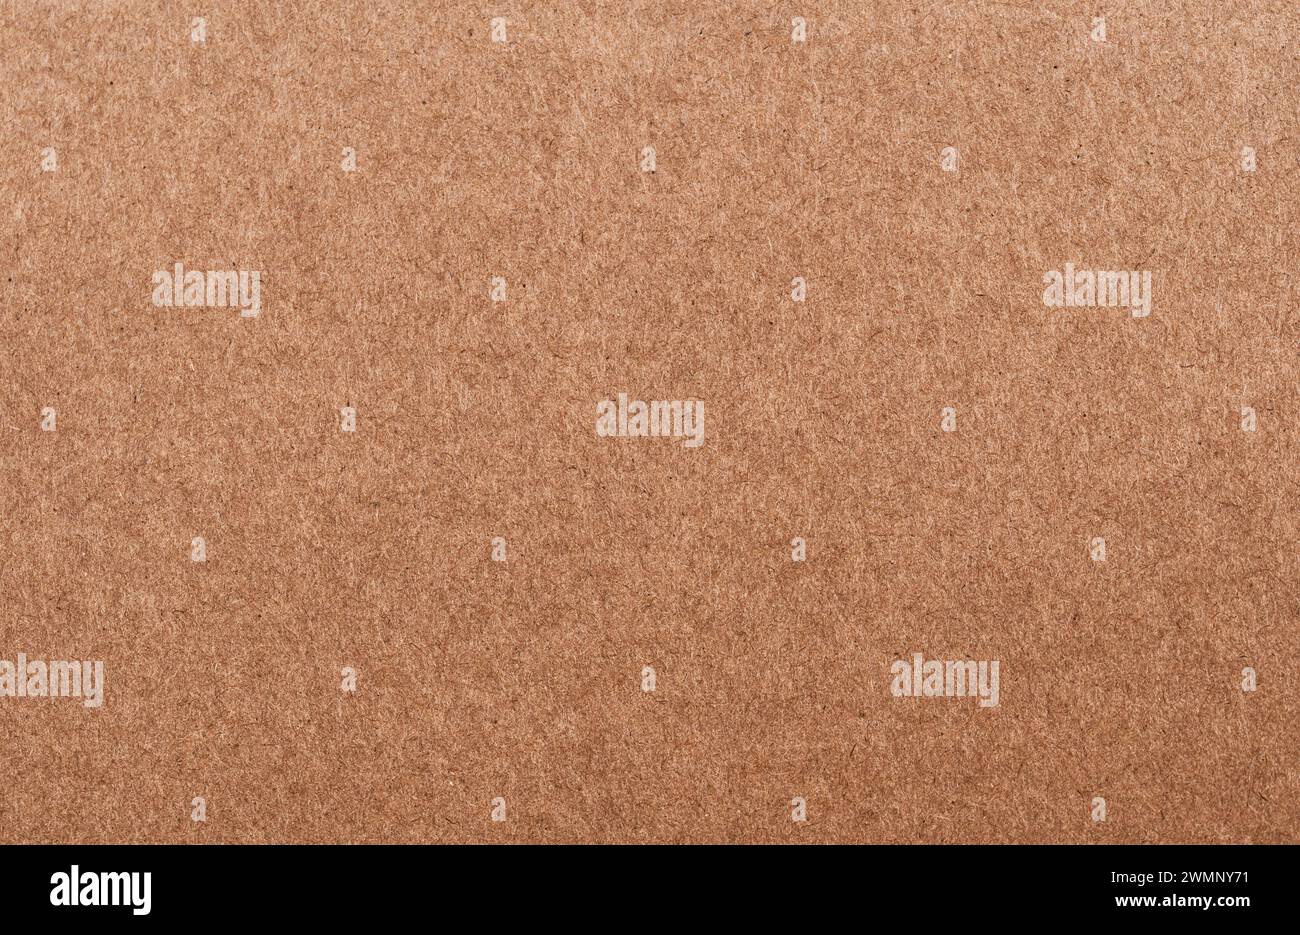 Cardboard background, brown border texture. Stock Photo